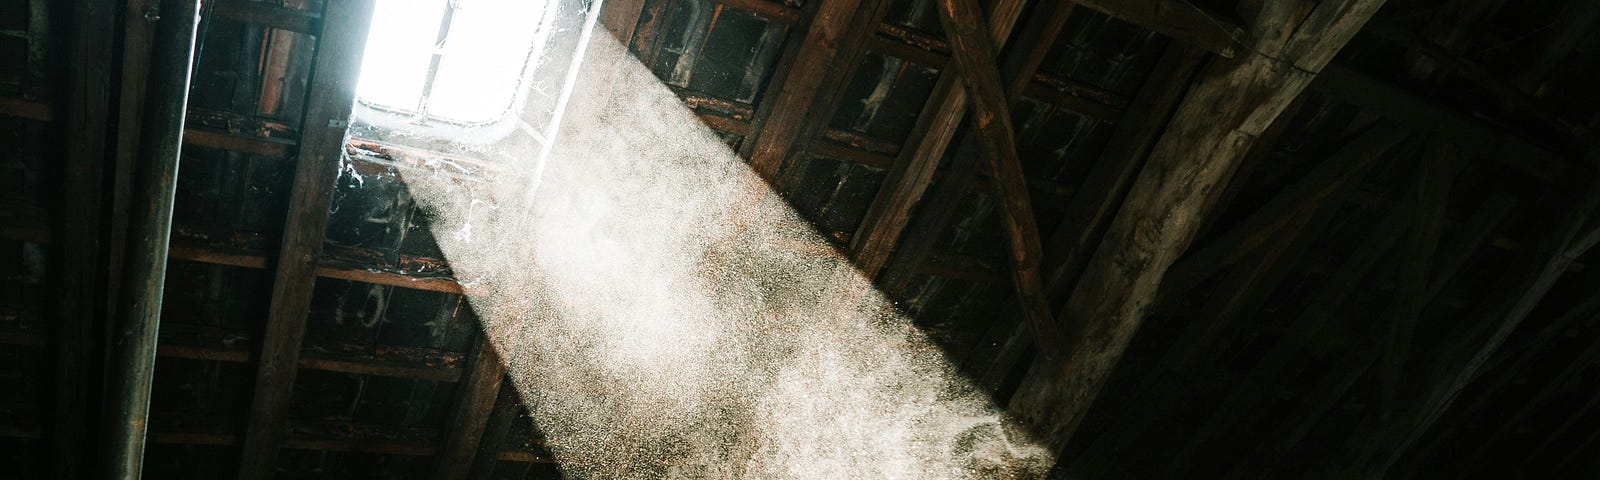 Dust illuminated by sunlight in an attic.